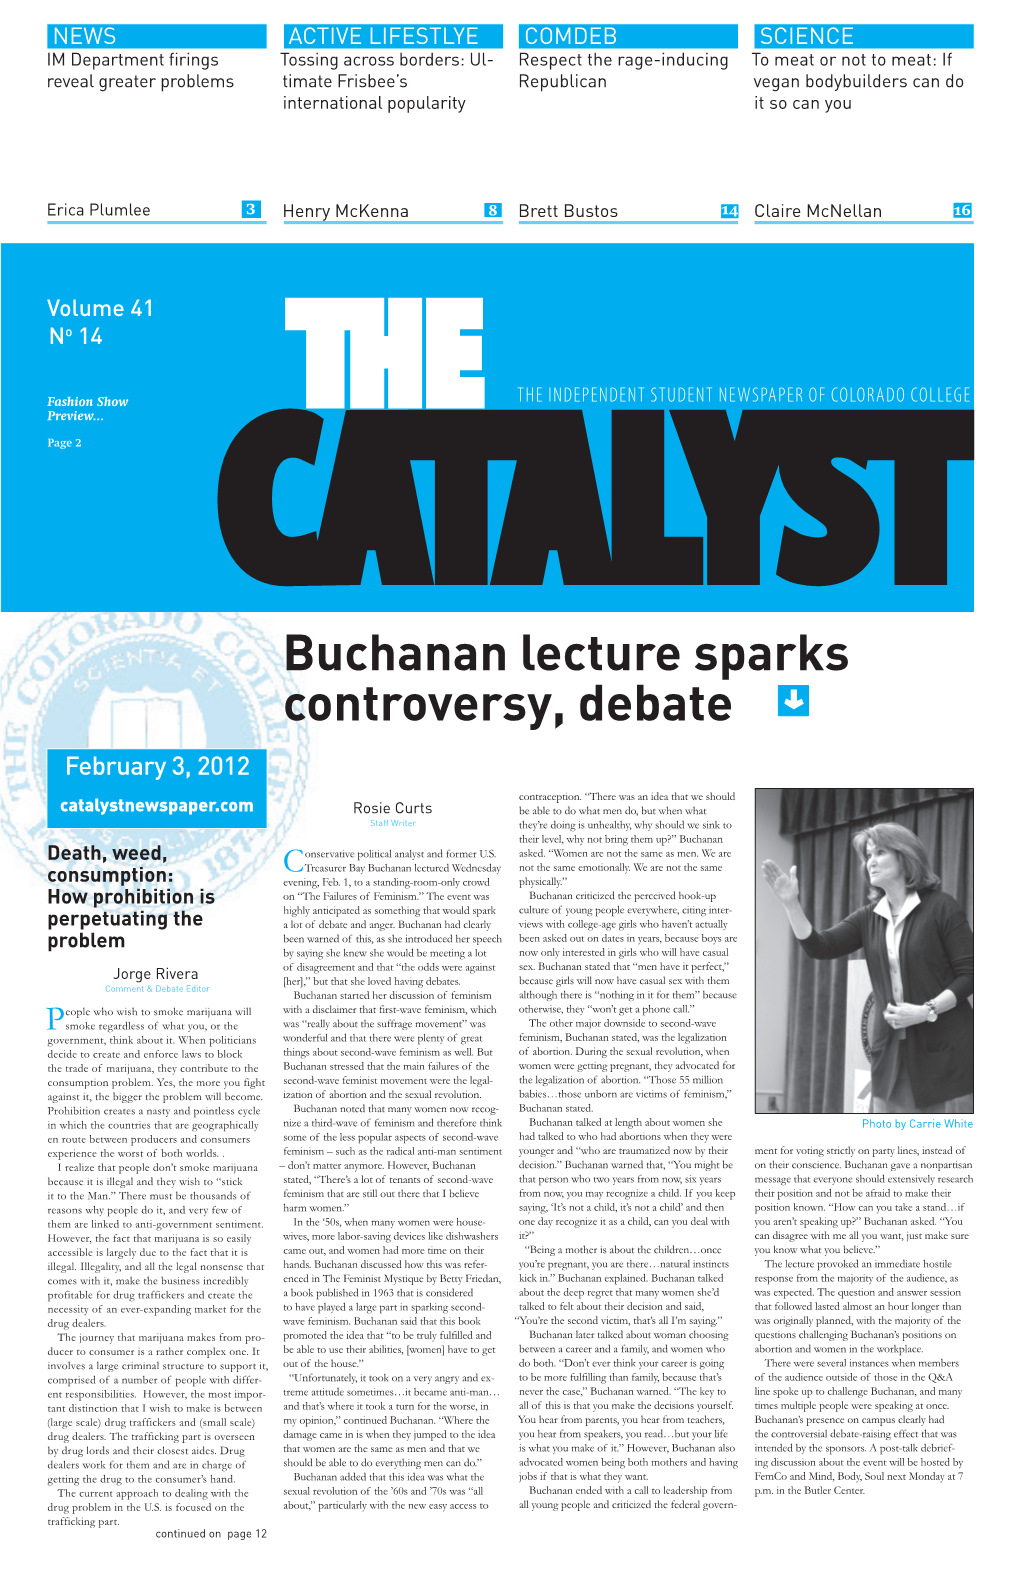 Buchanan Lecture Sparks Controversy, Debate > February 3, 2012 Contraception